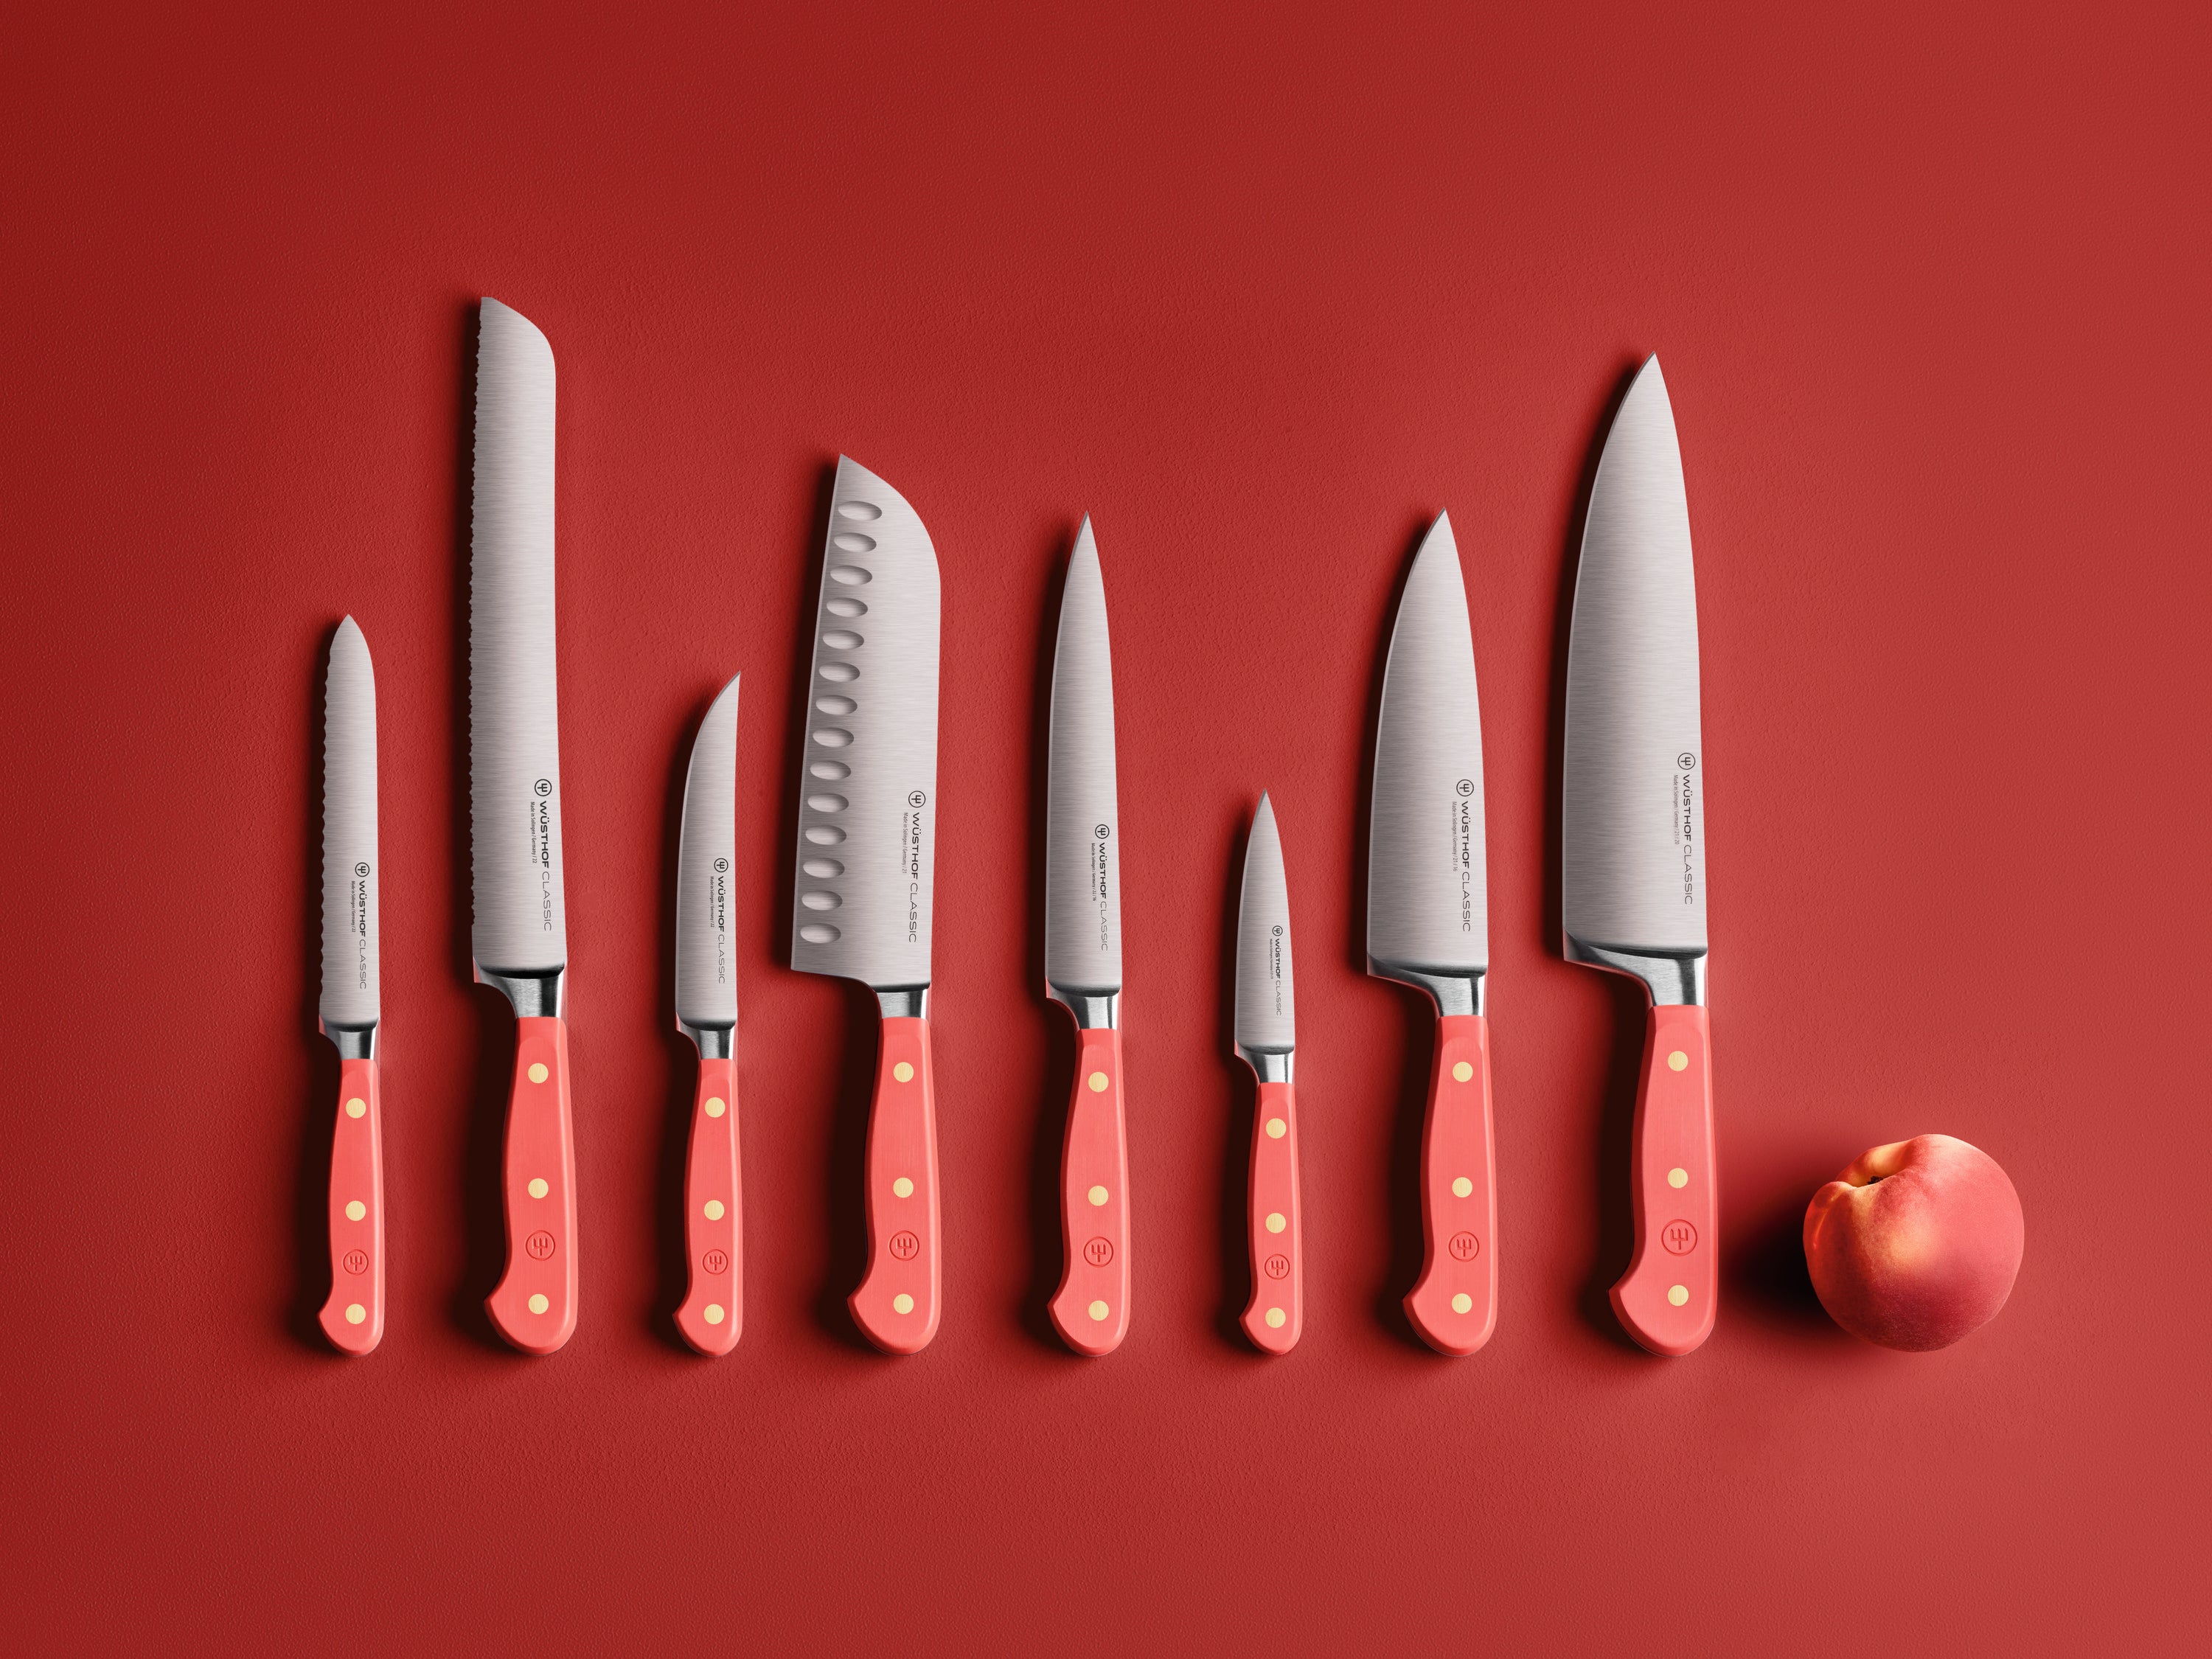 Wusthof Classic Colour Coral Peach Chef's Knife 16cm 1061700316W